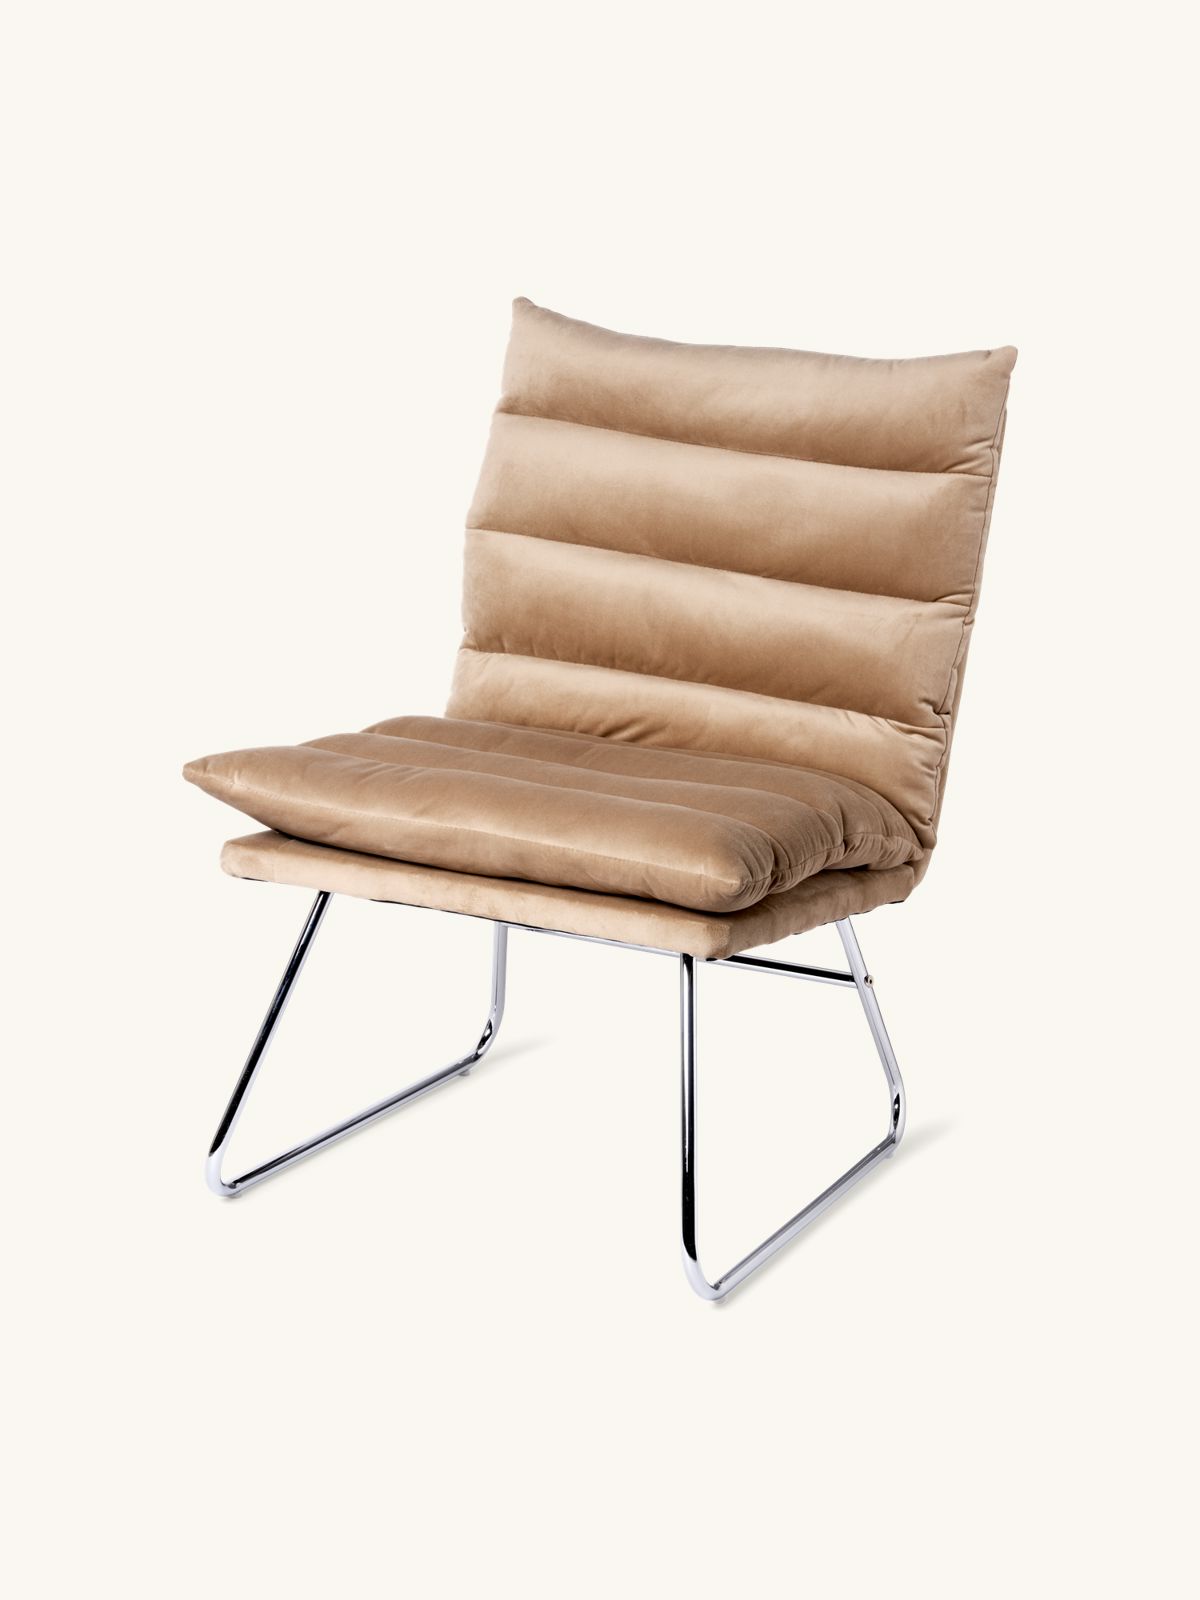 Chaise lounge | 55 x 61,4 x 53,9 cm. Coussins amovibles. | Søstrene Grene